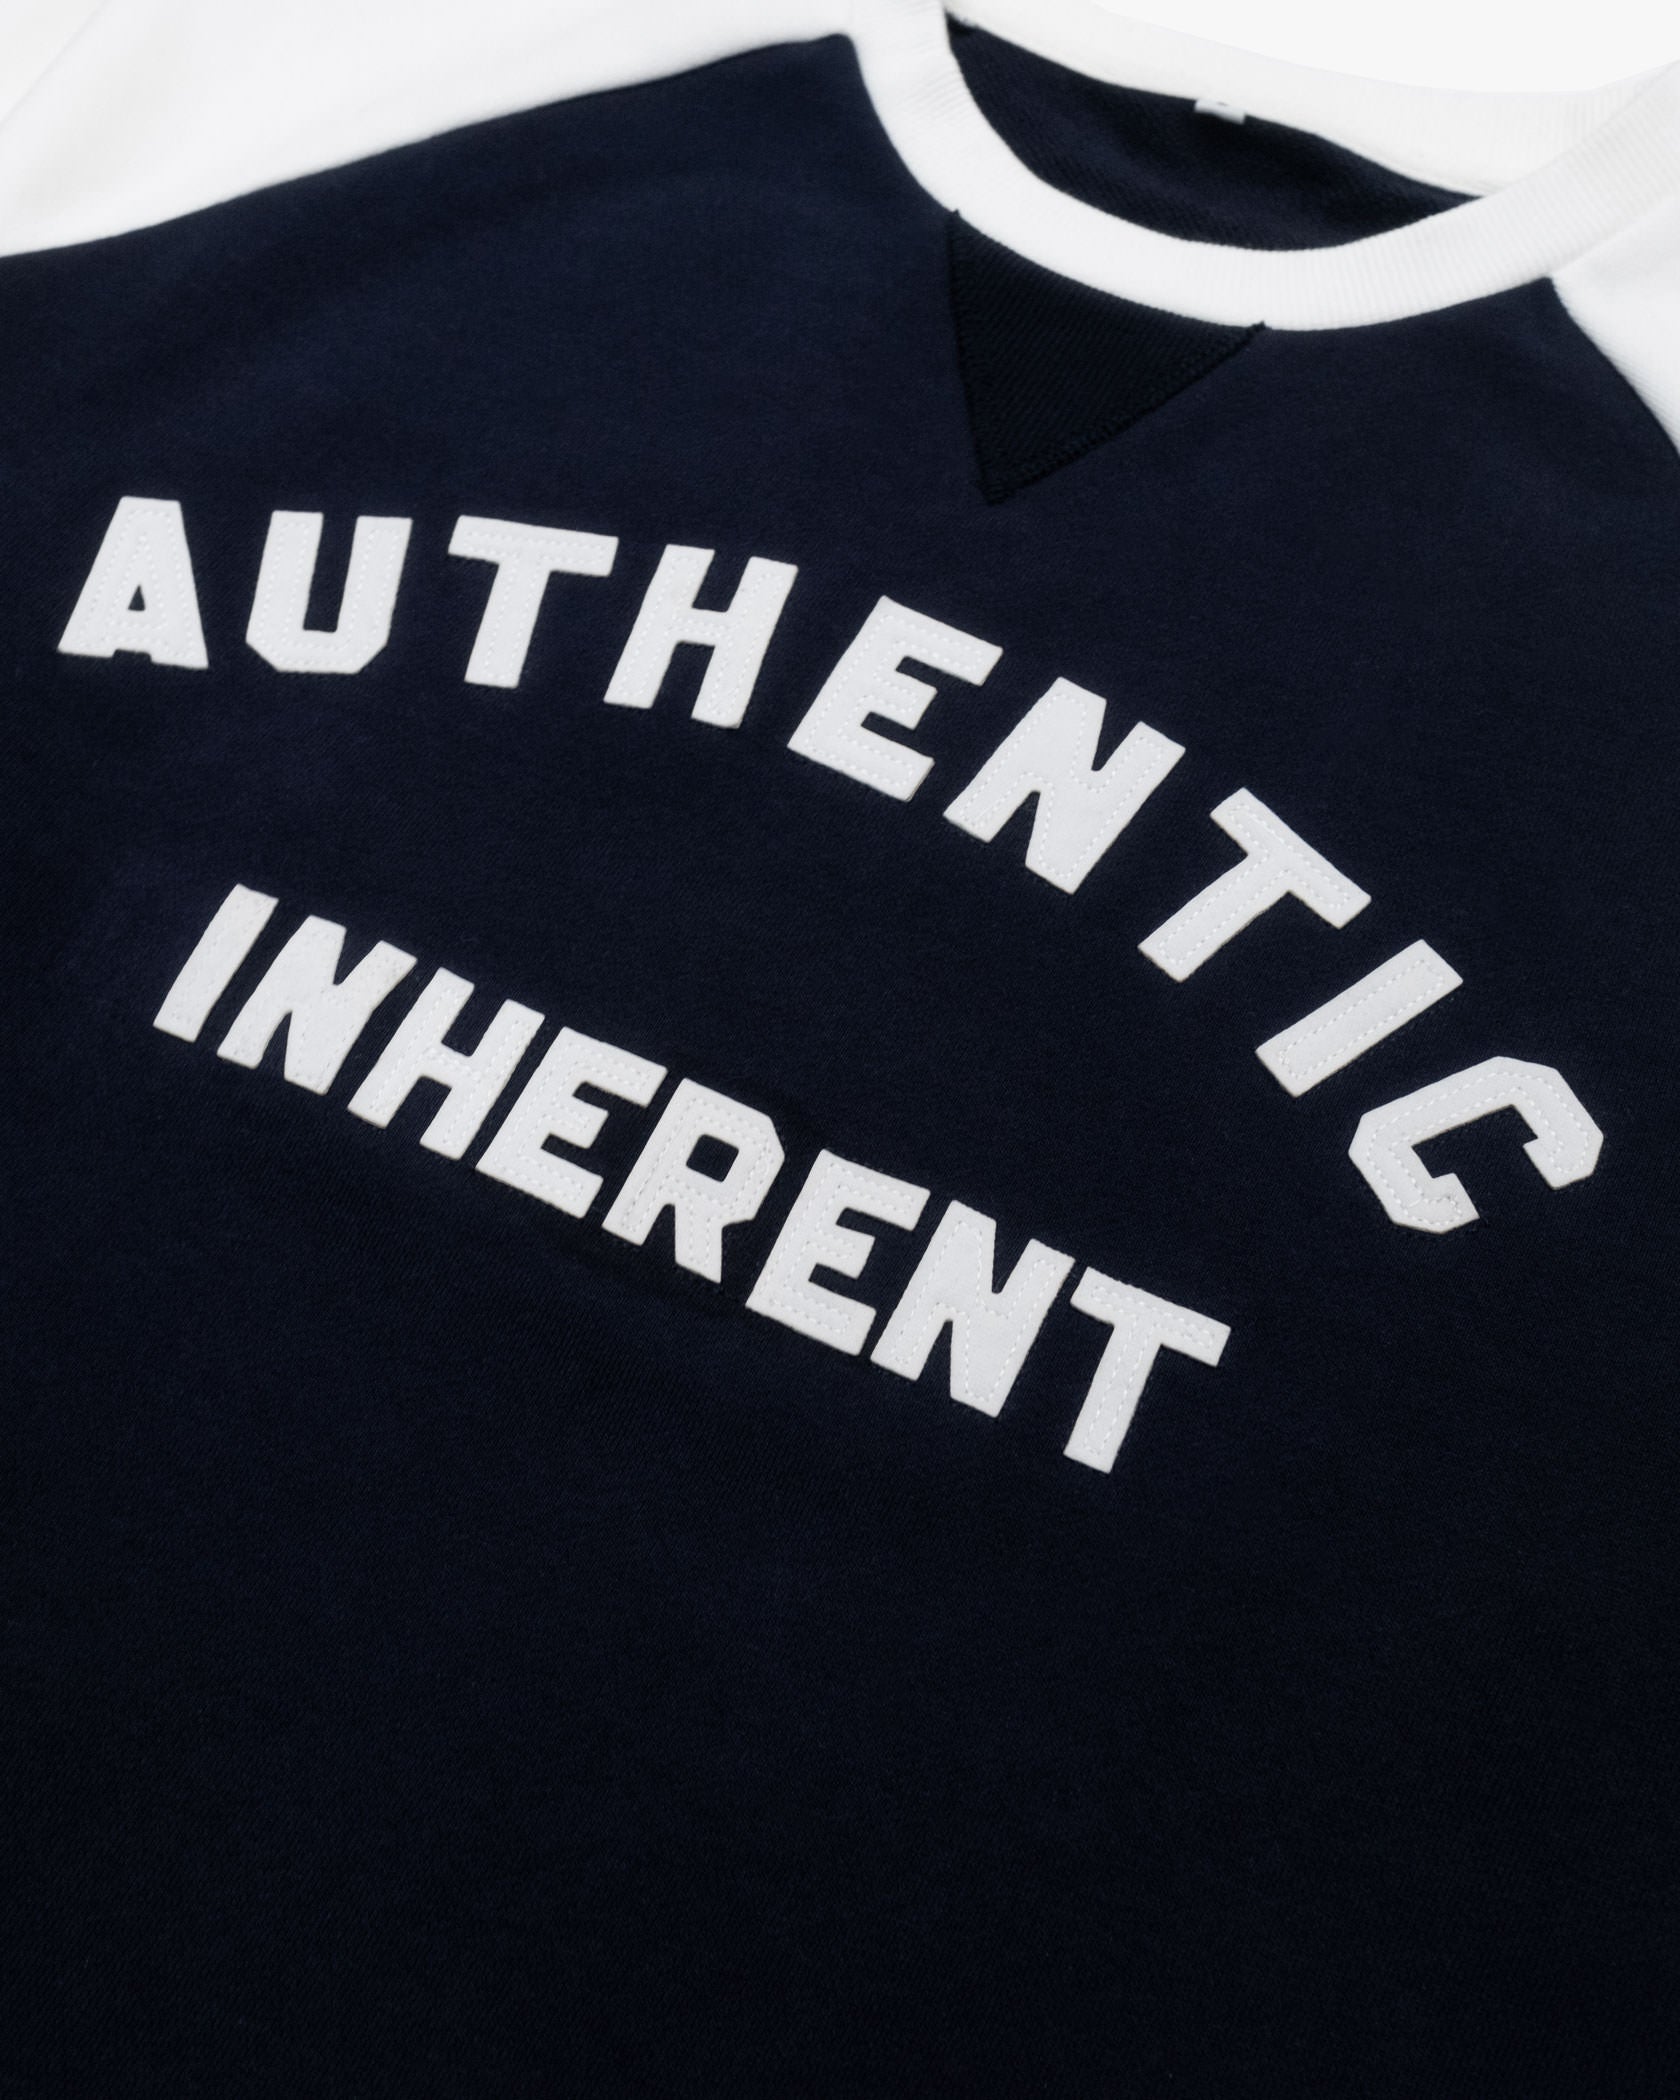 Authentic Inherent Moto Jersey